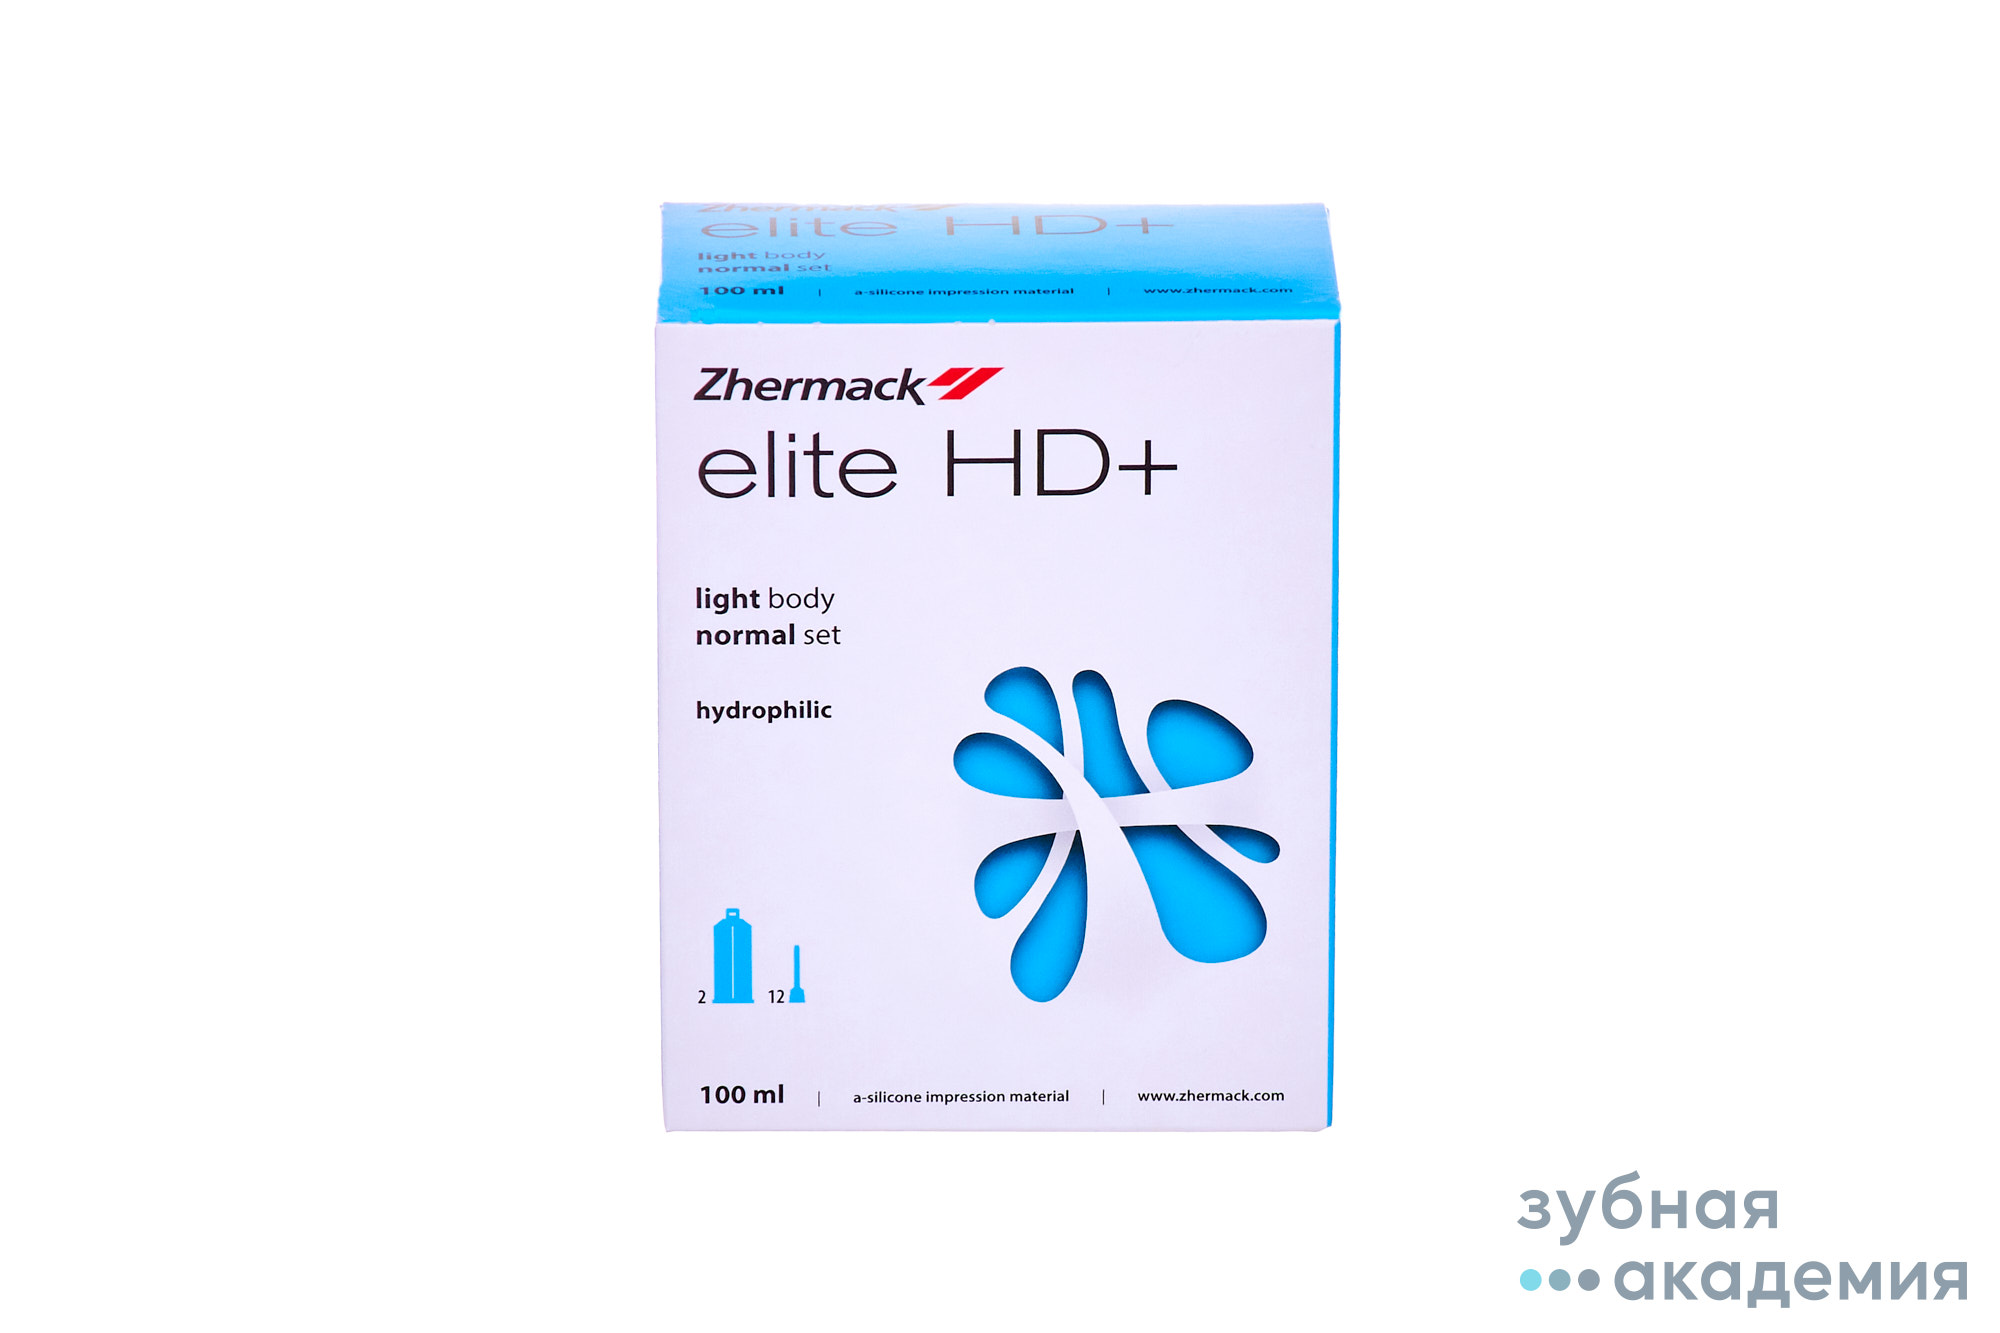 ELITE HD+ Light Body NORMAL SET Элит HD- А-силикон слеп. материал, 50мл+50мл/ZHERMACK/ Италия